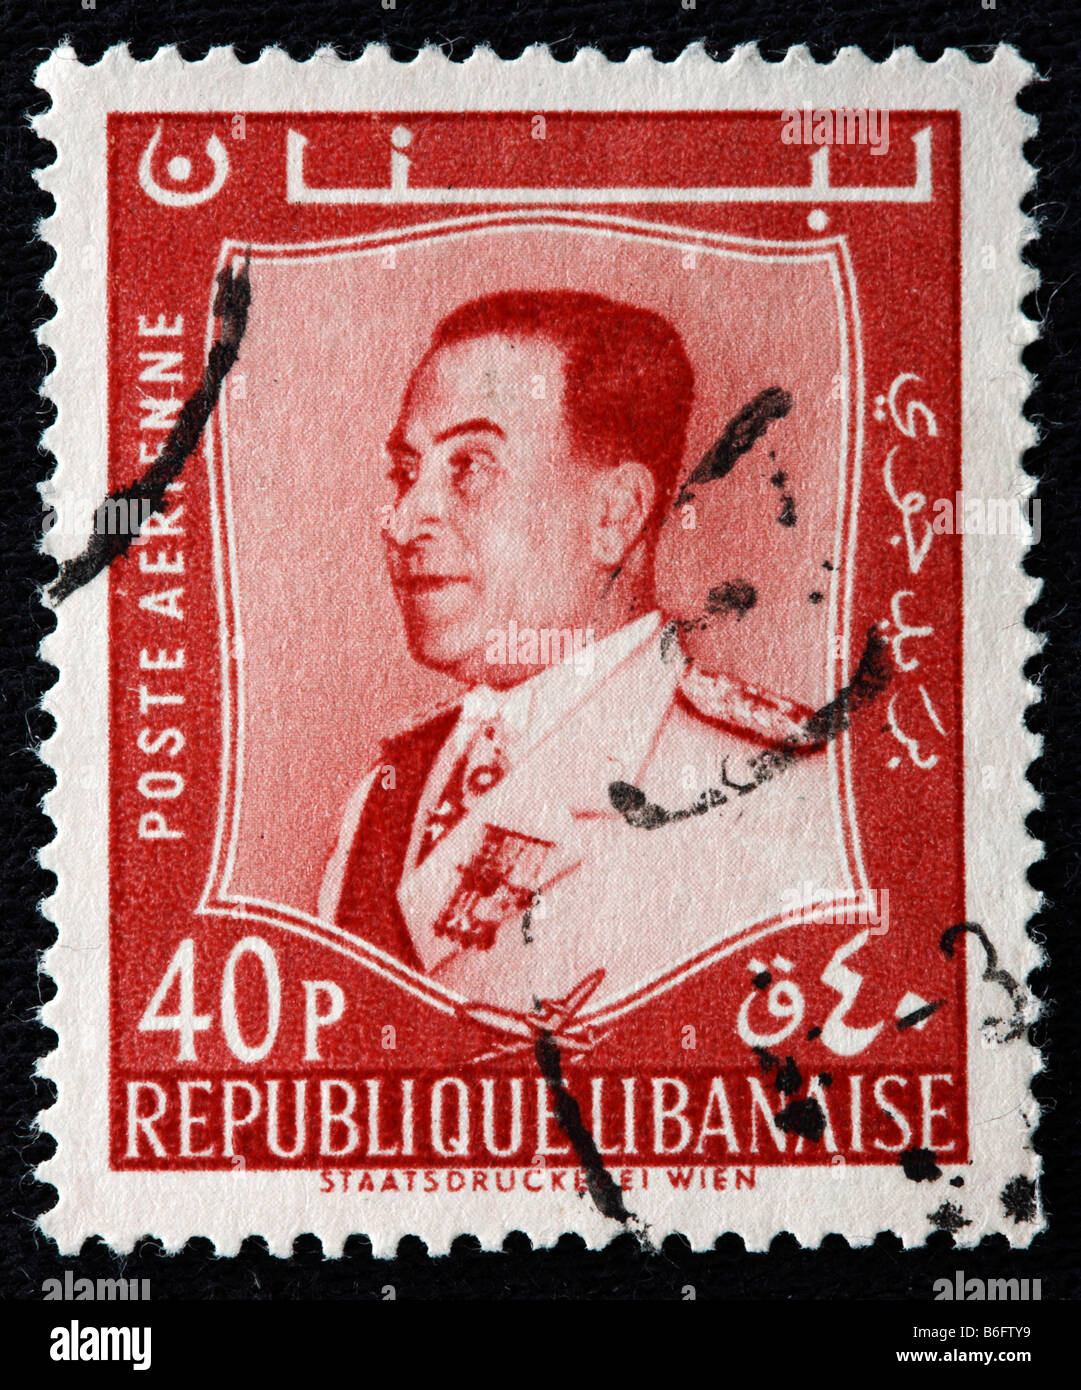 Fuad Chehab, President of the Lebanese Republic (1958-1964), Postage stamp, Lebanon Stock Photo